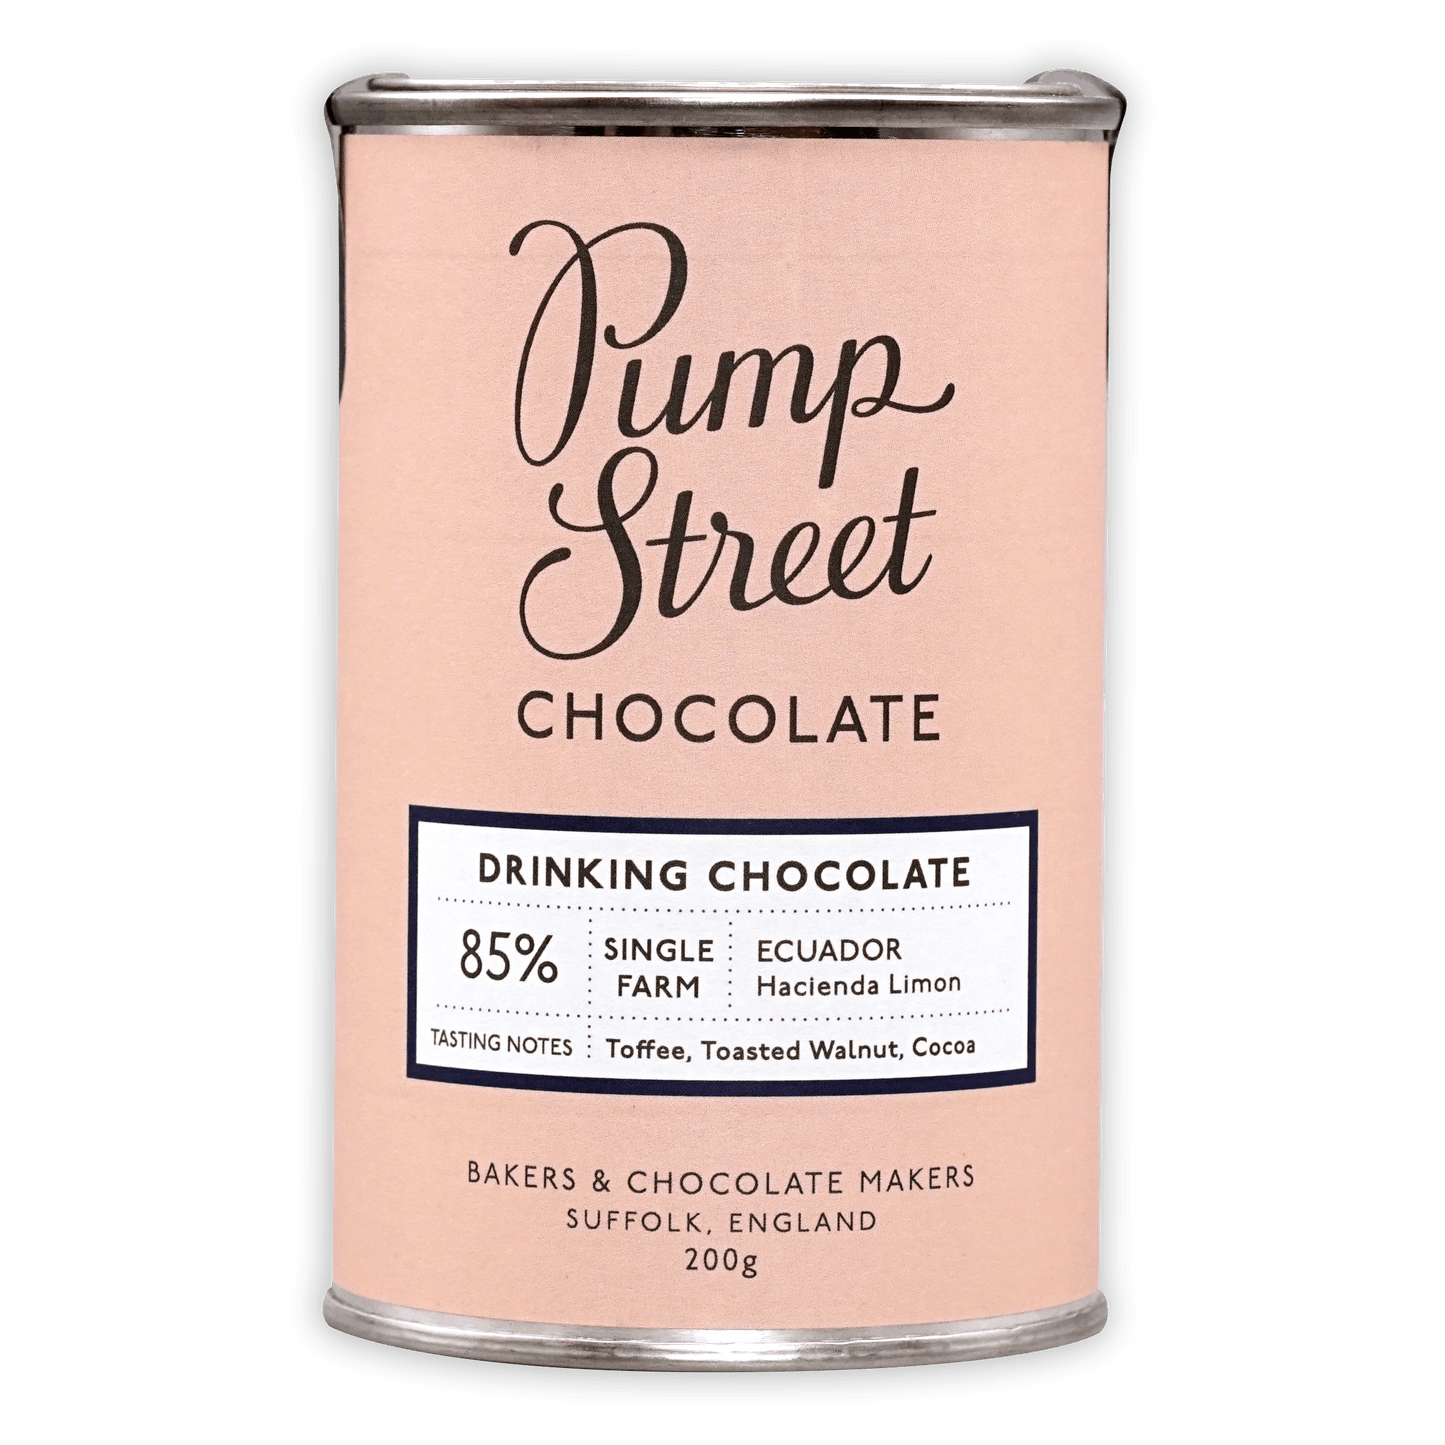 Pump Street Drinking Chocolate Ecuador 85%